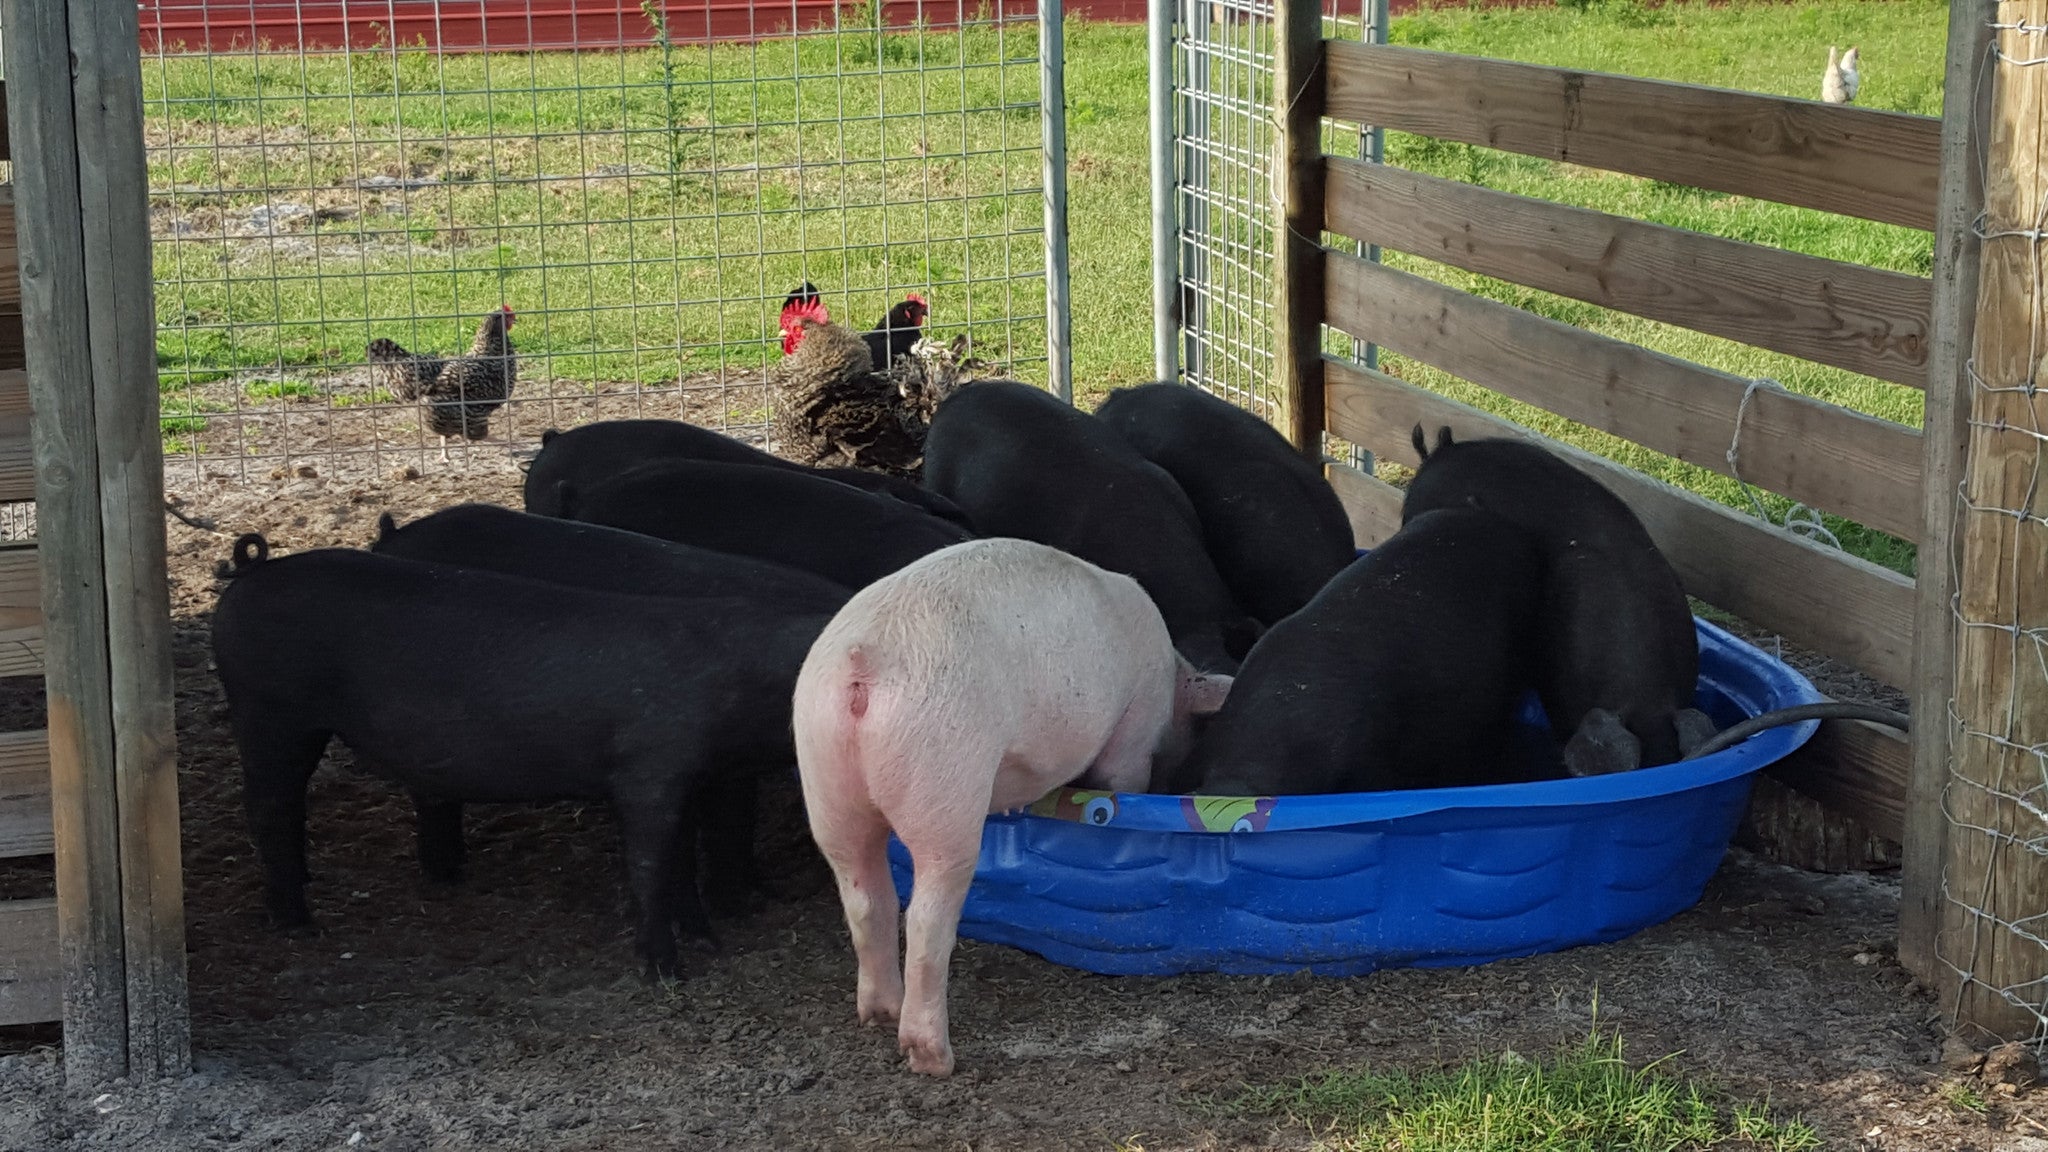 Circle C Farm raises Heritage Breed Large Black Pigs and Hogs